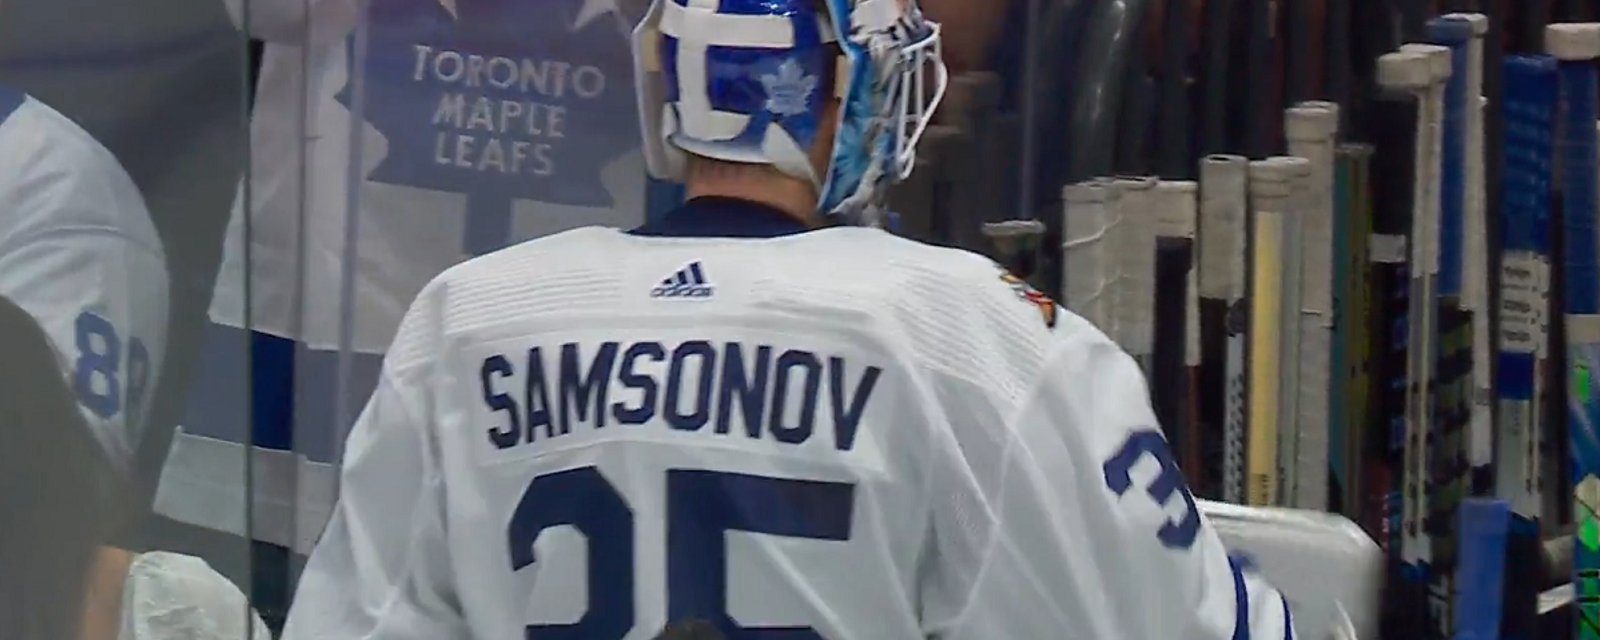 Breaking: Ilya Samsonov hurt during practice on Saturday.